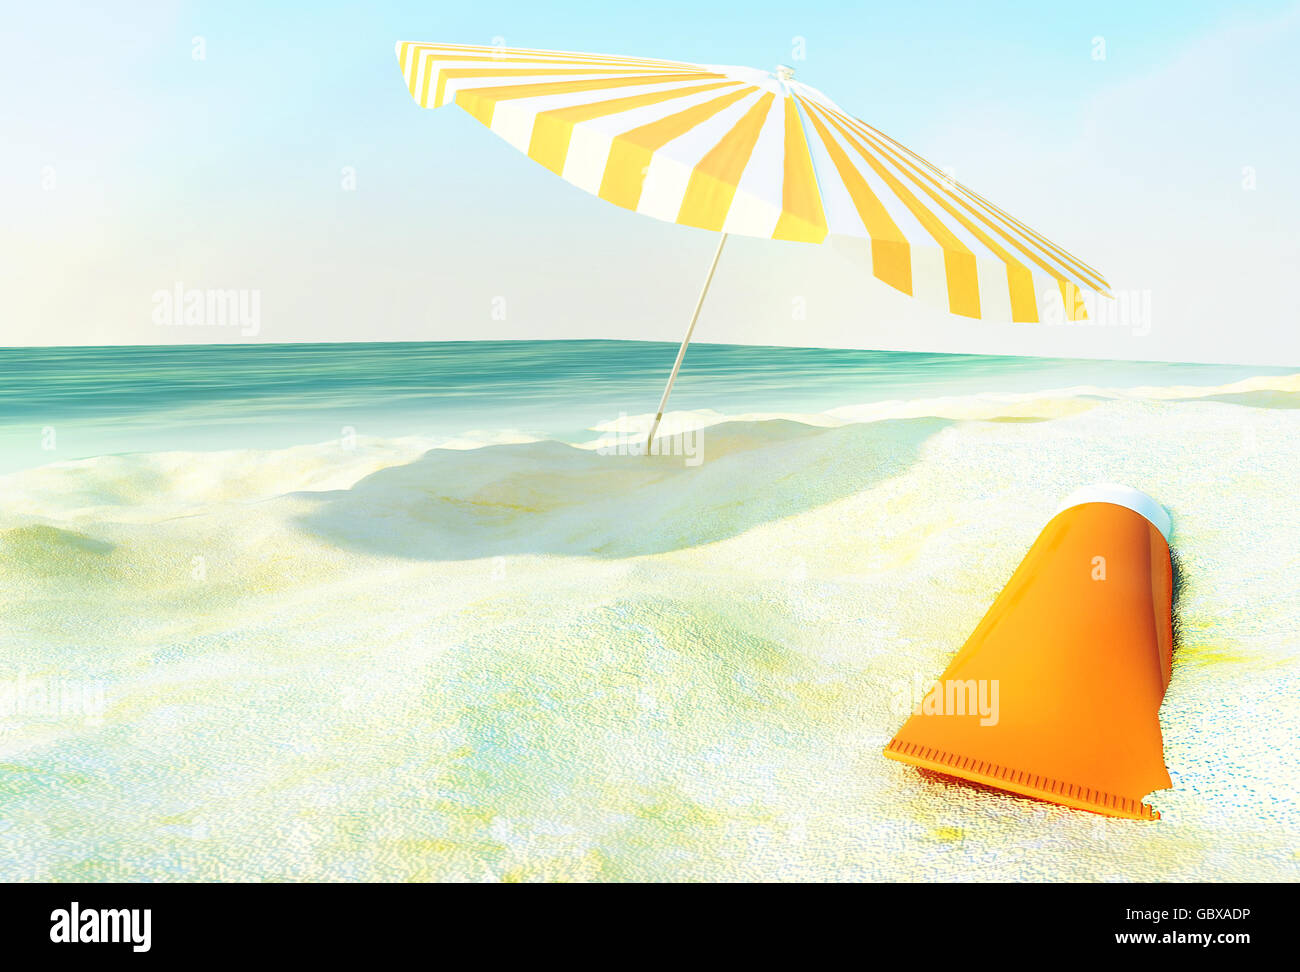 Beach scene with sunscreen and sun umbrella against ocean background. Stock Photo